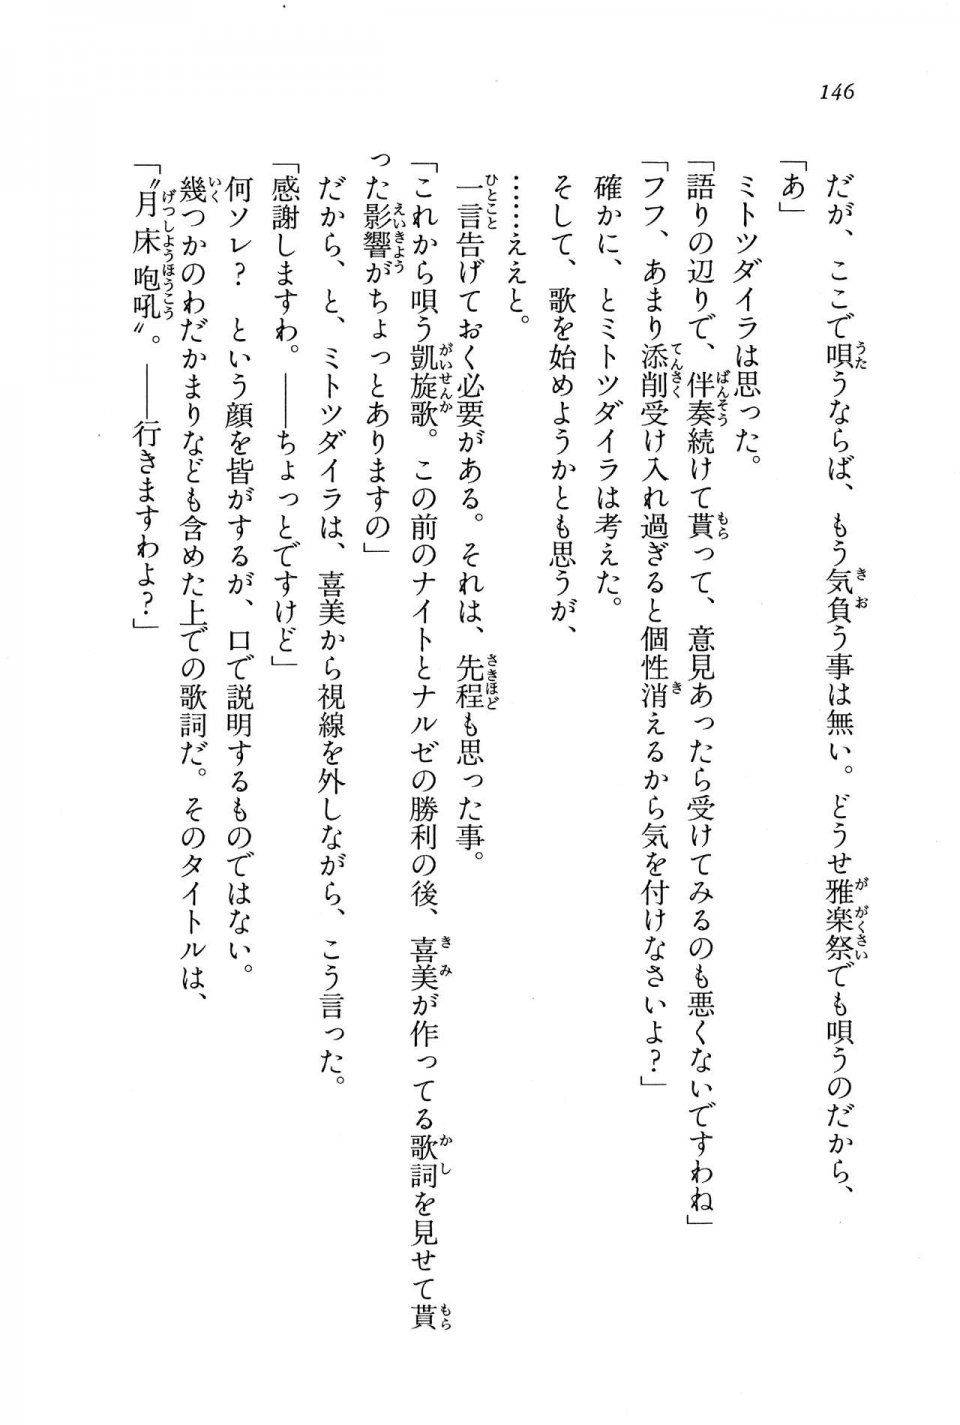 Kyoukai Senjou no Horizon BD Special Mininovel Vol 8(4B) - Photo #150